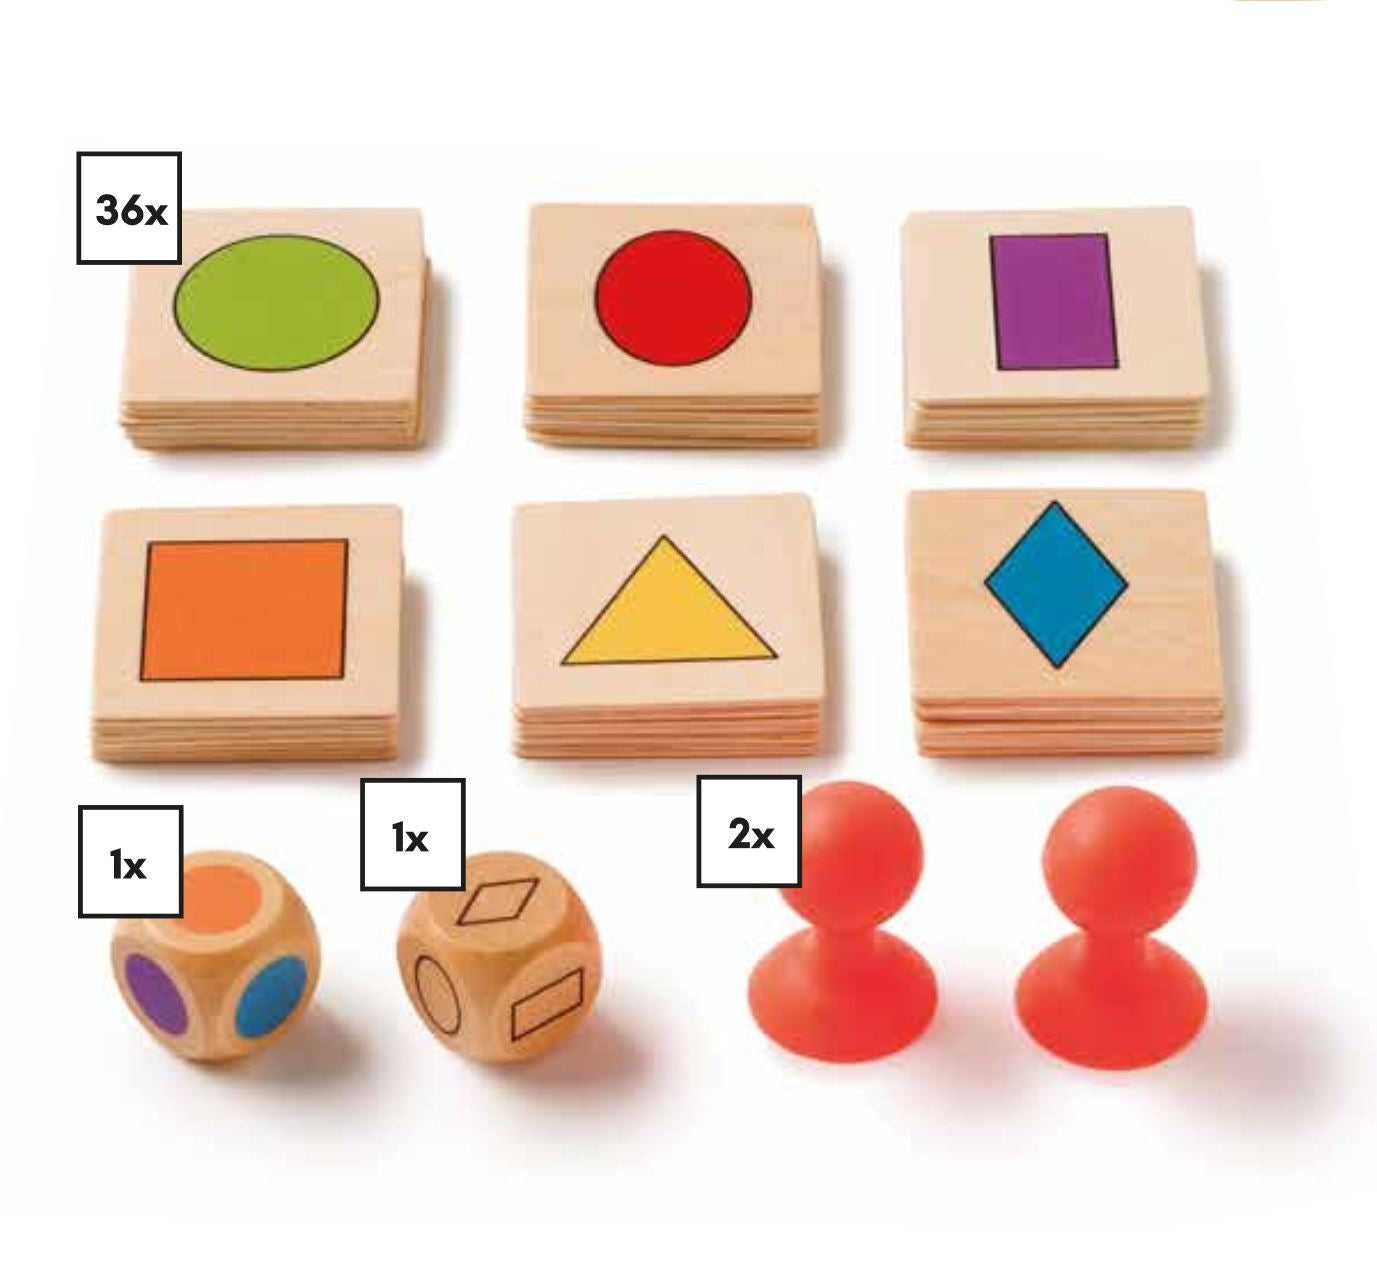 Shape and Colour Game: Stick the shape